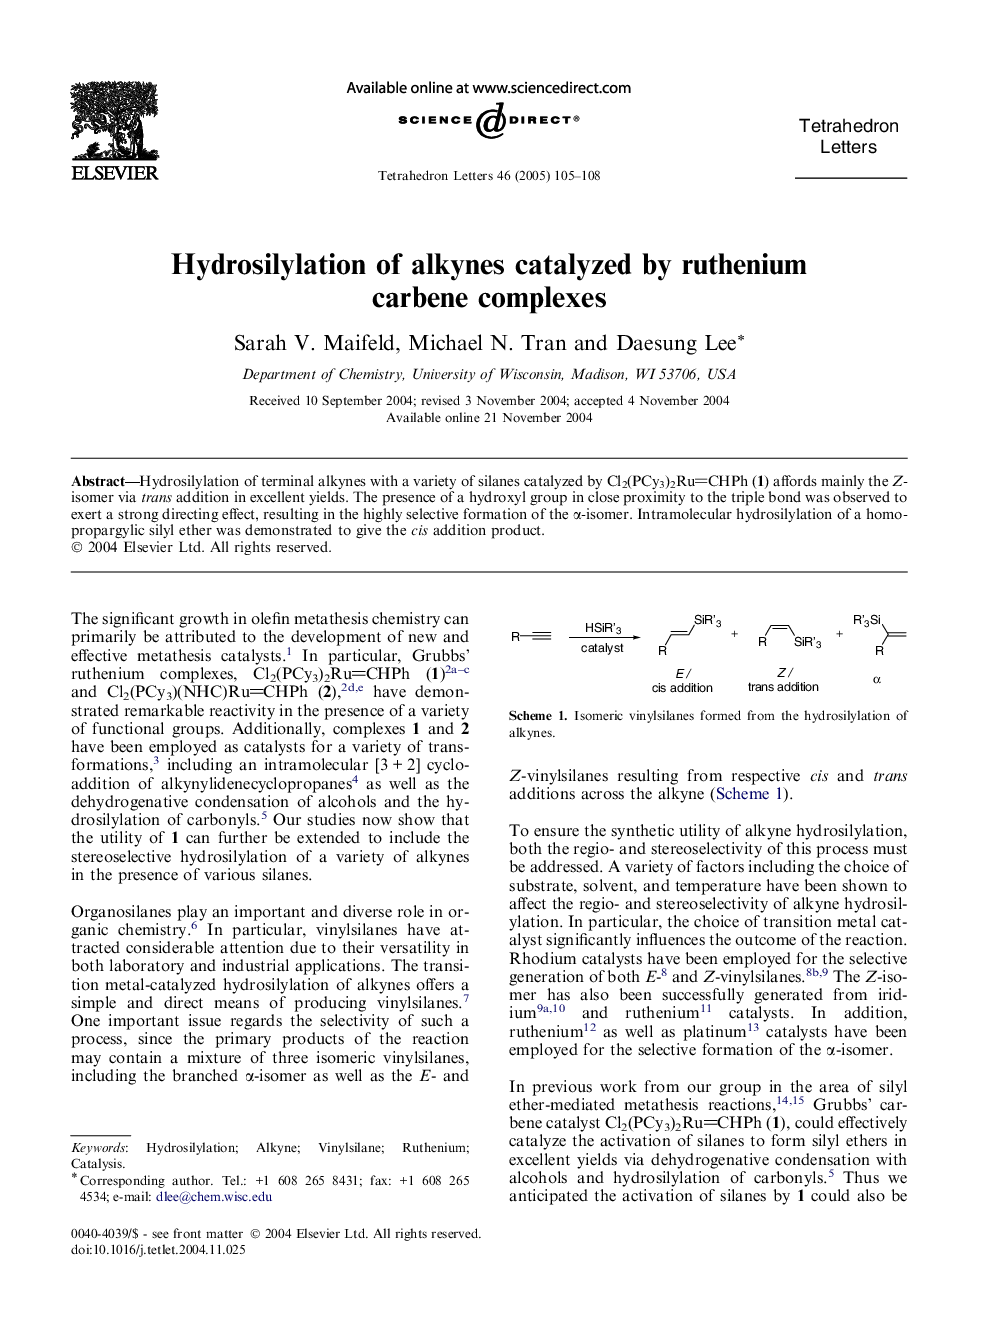 Hydrosilylation of alkynes catalyzed by ruthenium carbene complexes